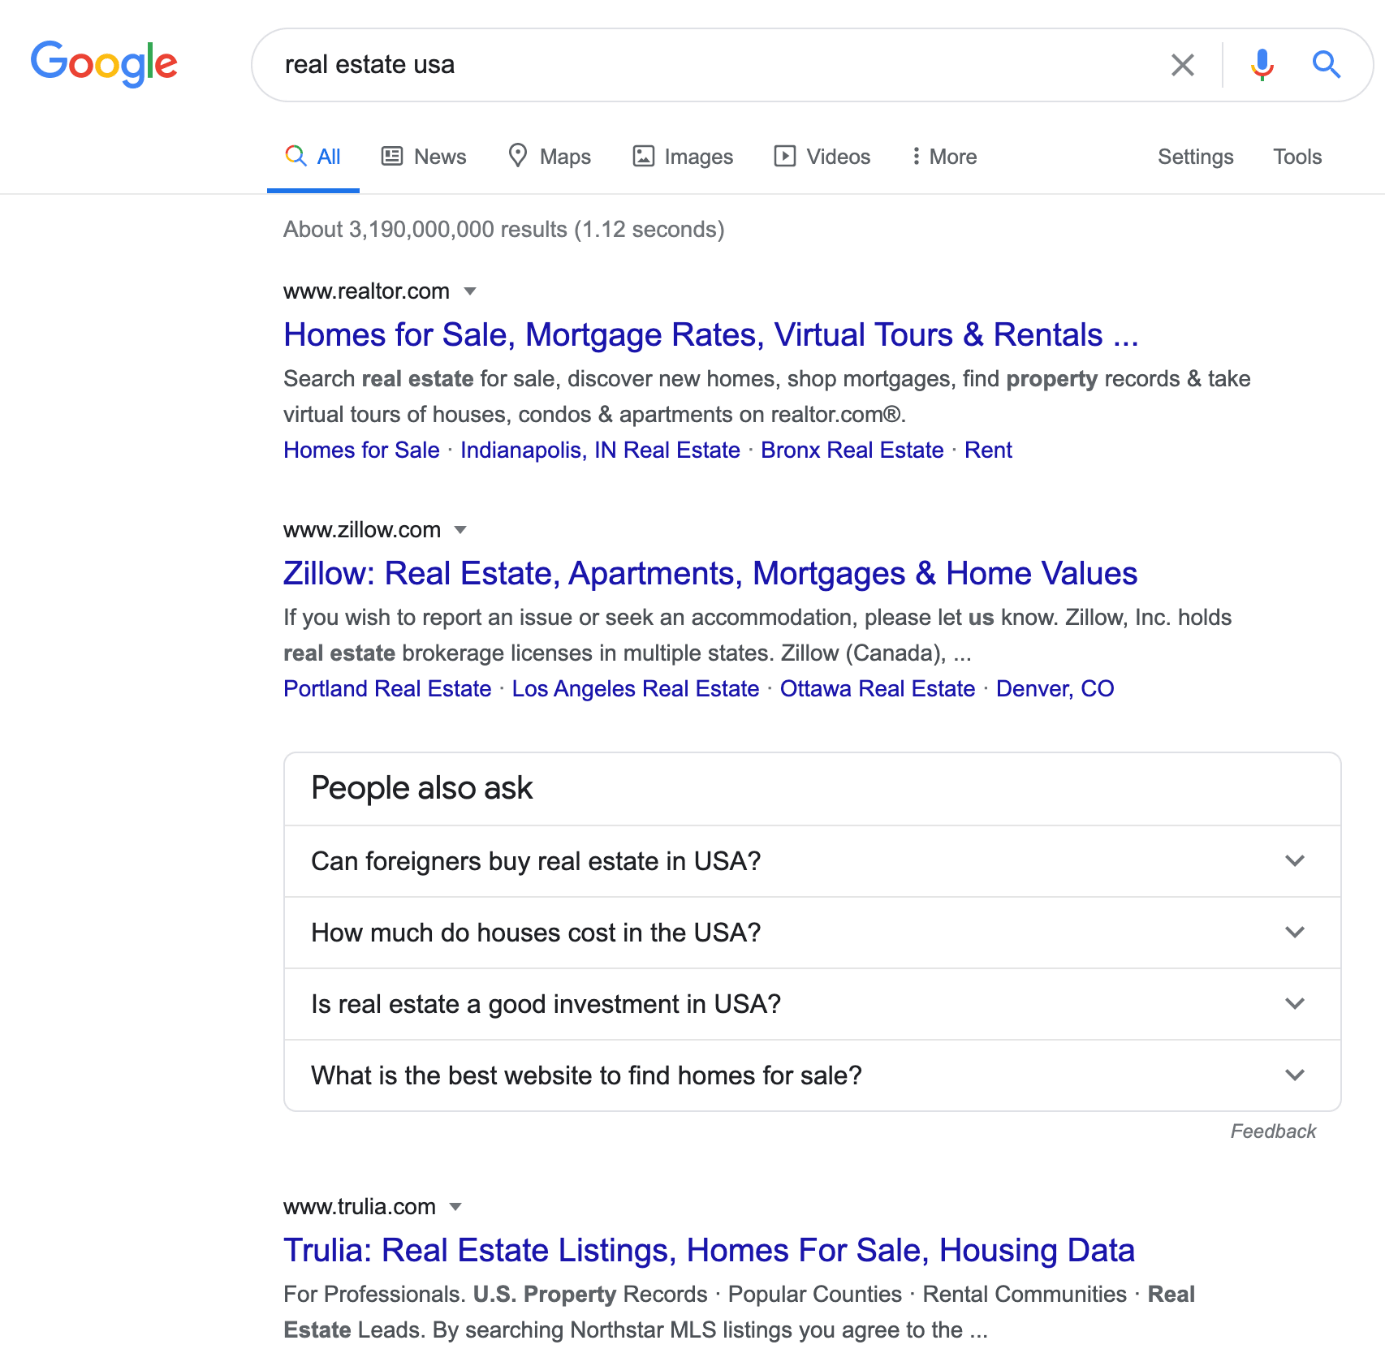 SERP Google search “real estate usa”